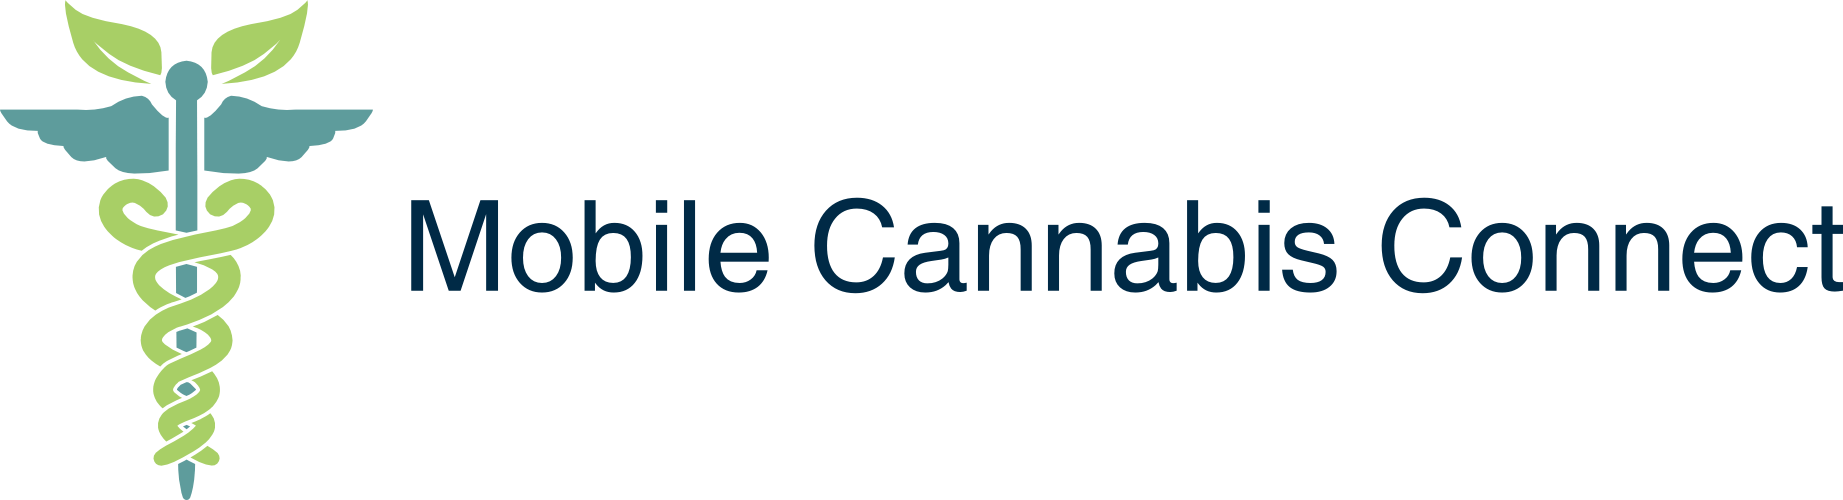 Mobile Cannabis Connect - Medical Marijuana Doctors - Cannabizme.com